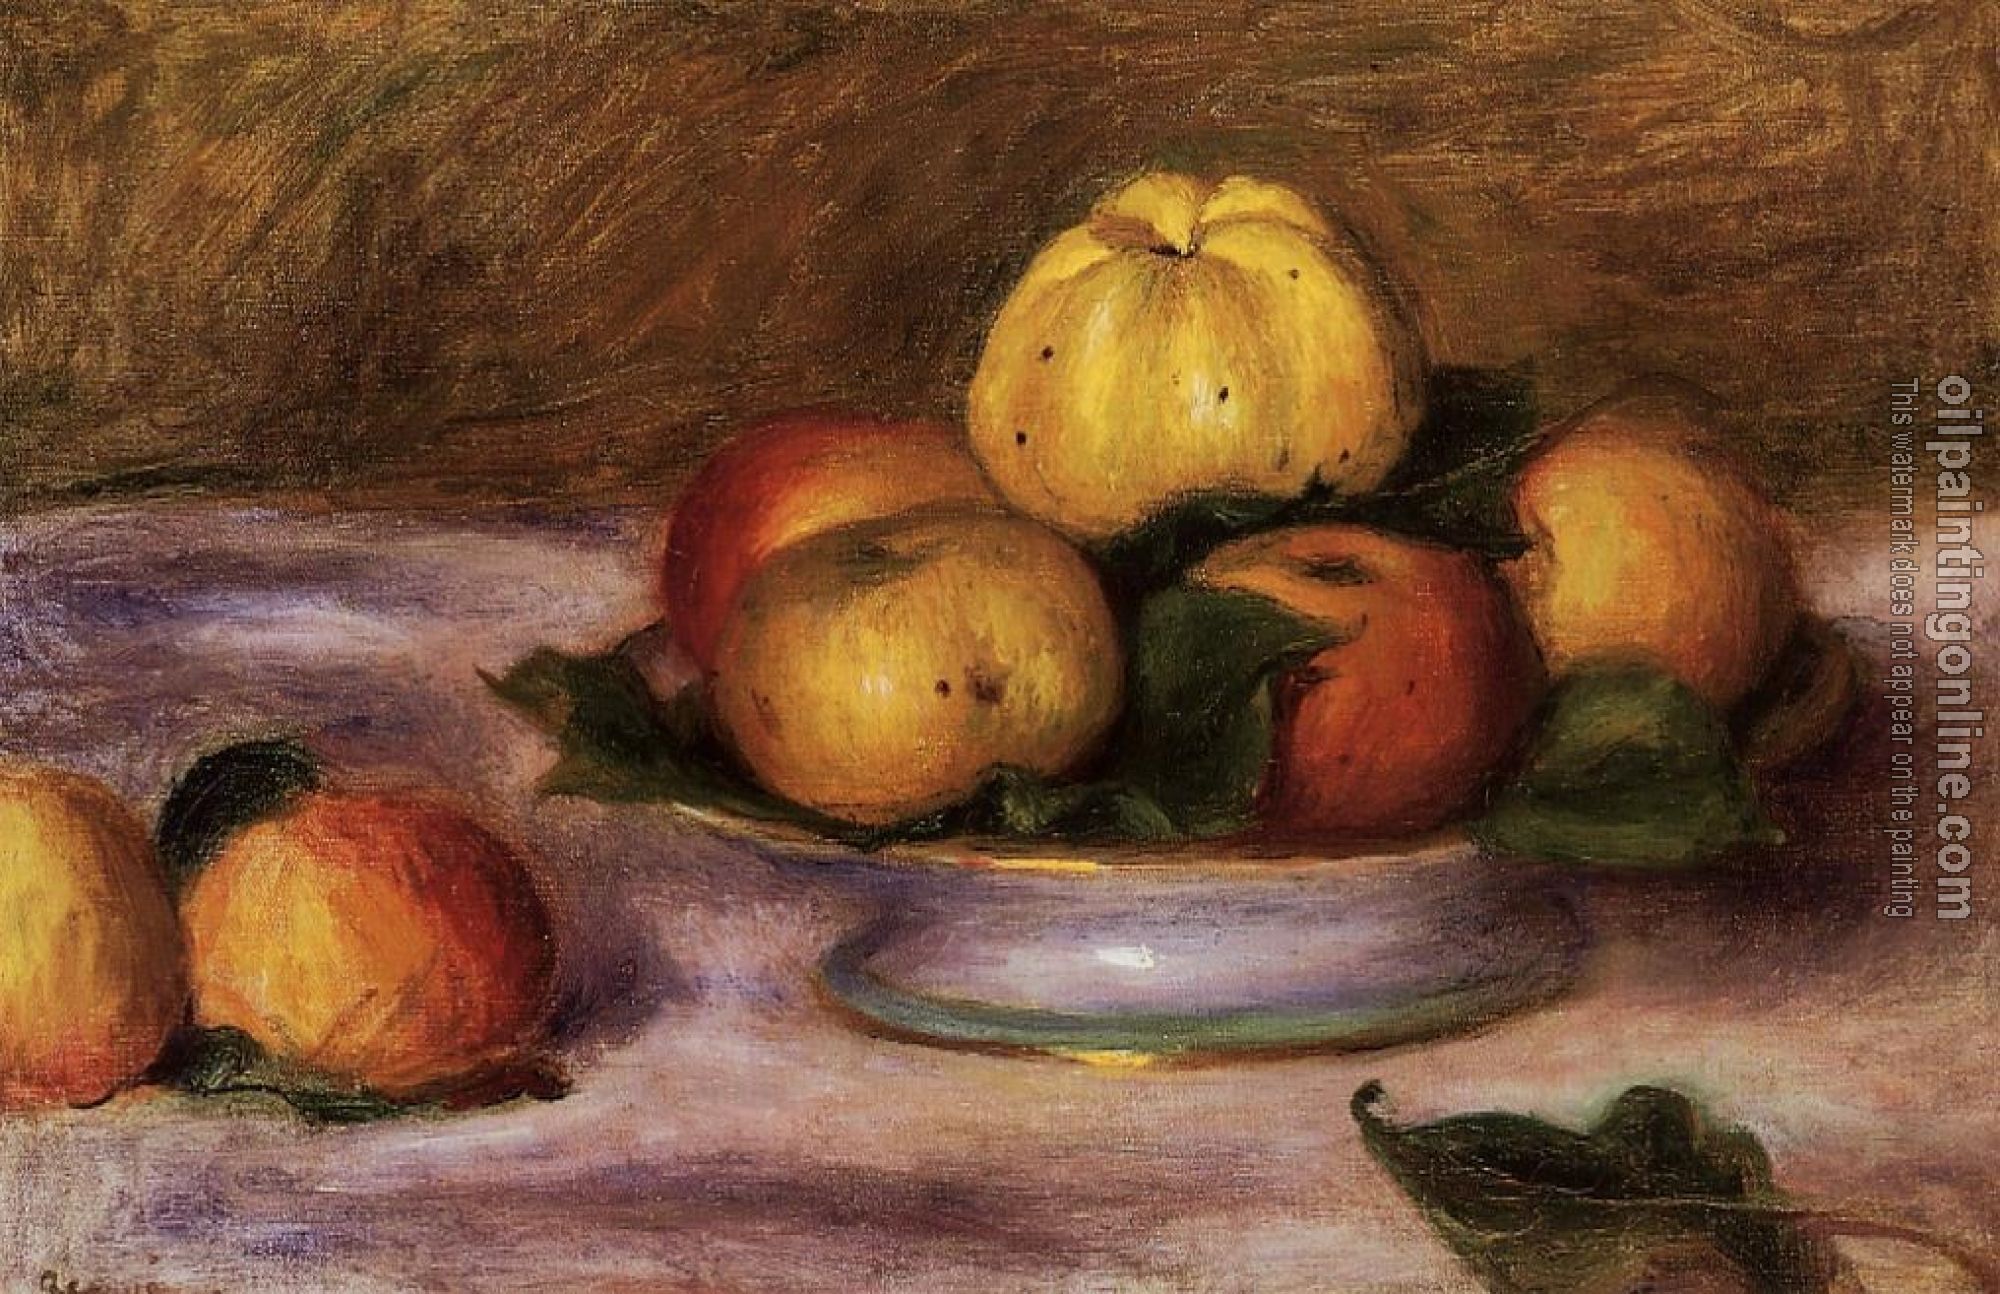 Renoir, Pierre Auguste - Apples on a Plate